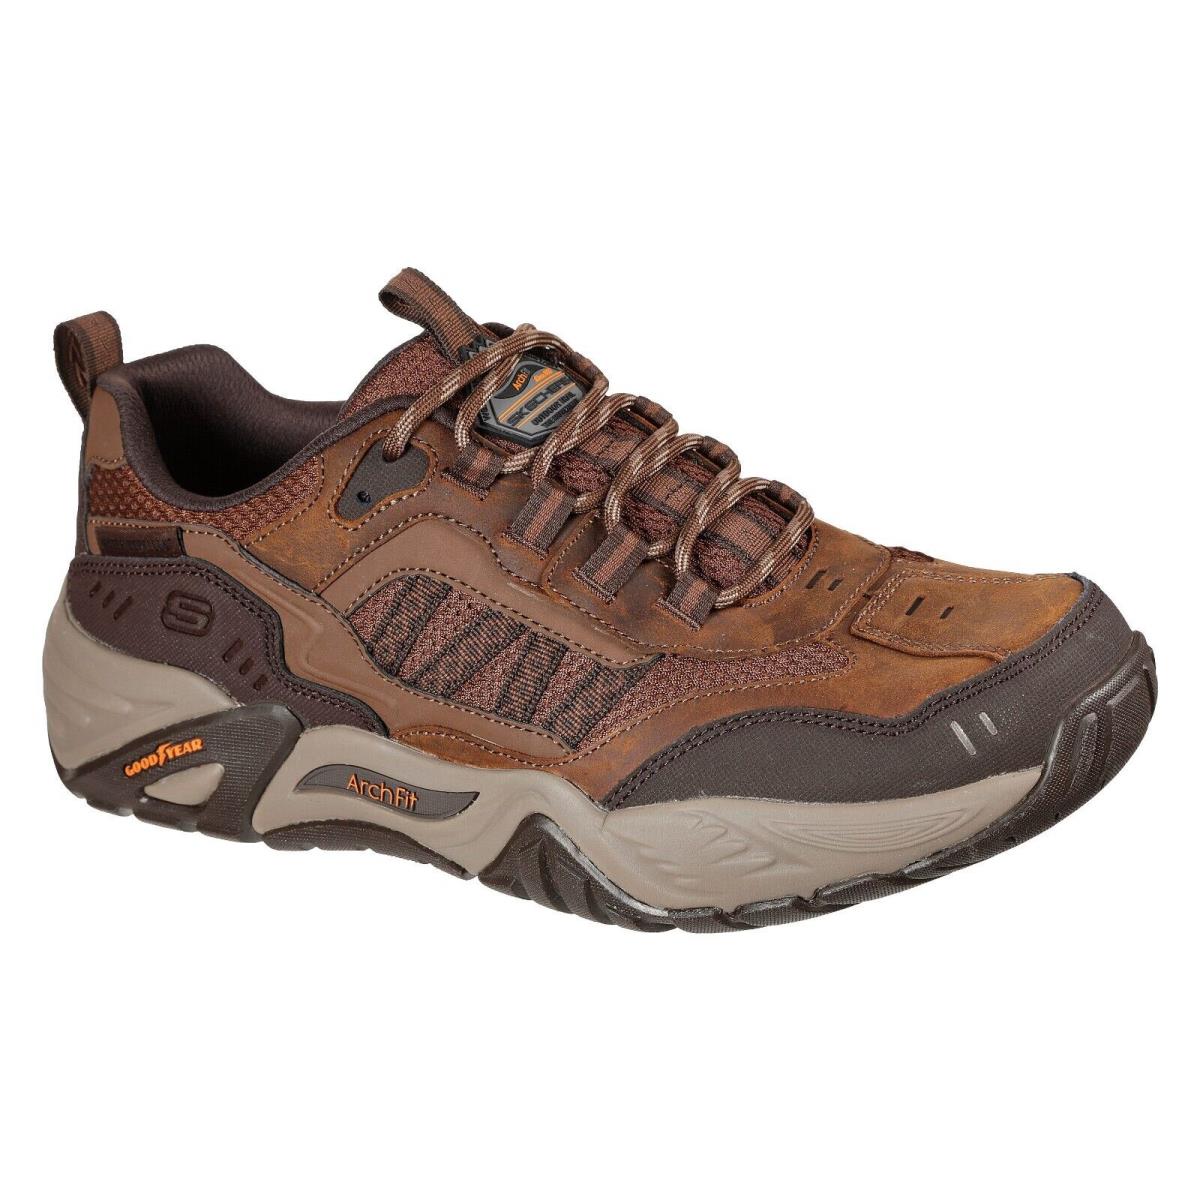 Men Skechers Arch Fit Recon Jericko Hiking Shoes 204412 /cdb Multi Sizes DK Brn - Dark Brown